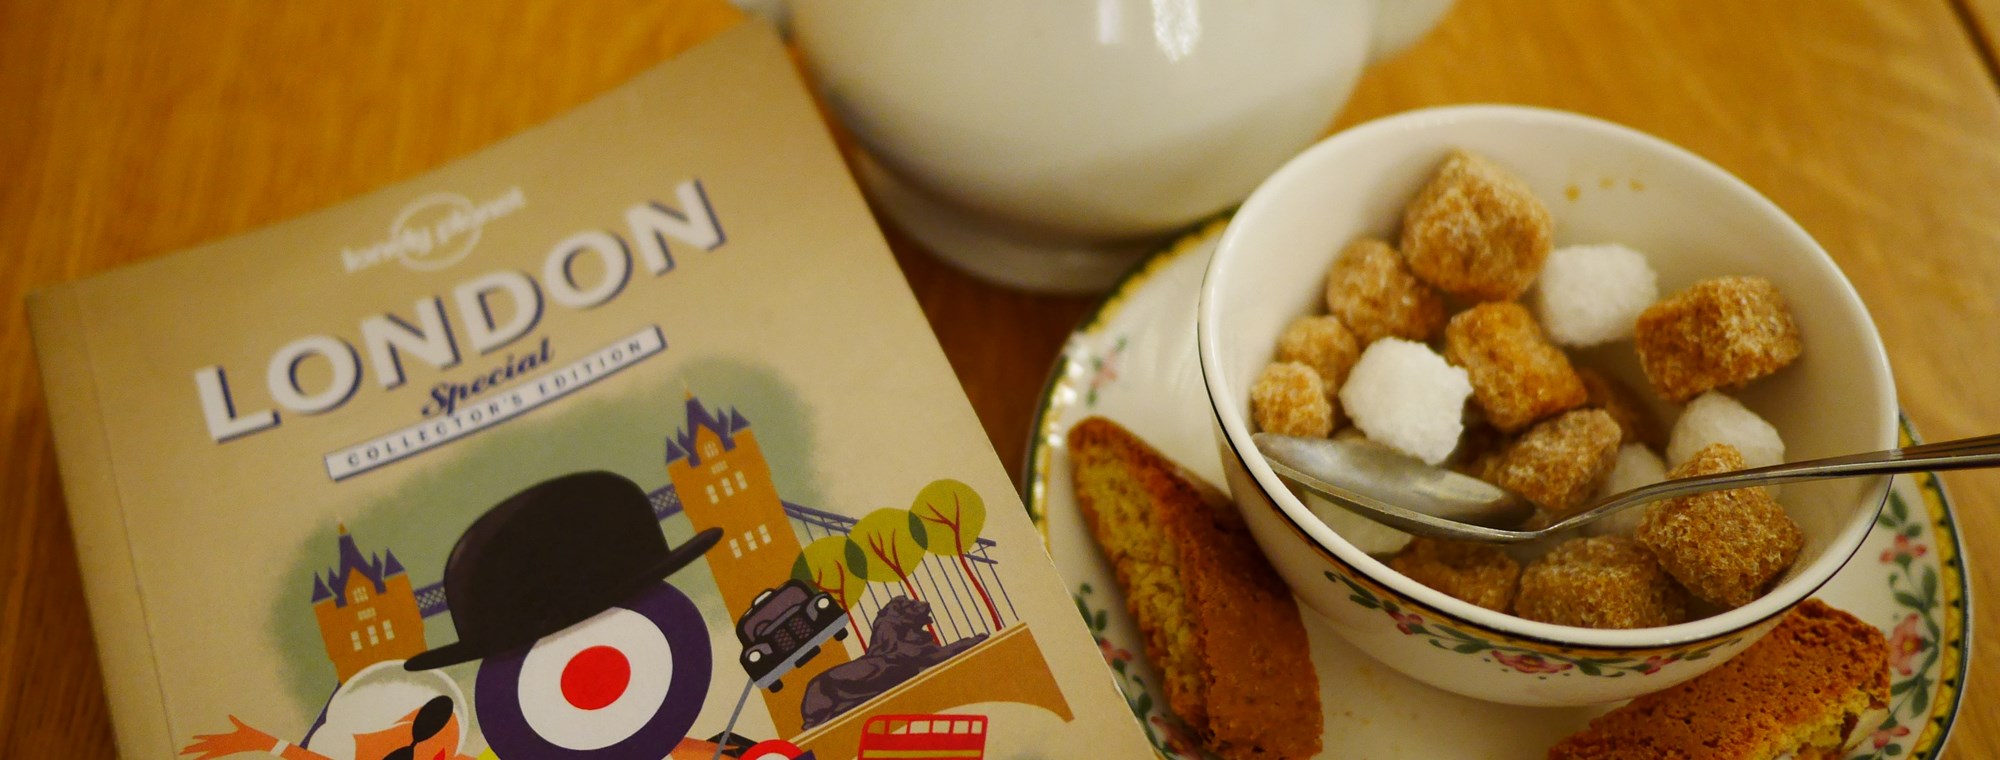 London Guide Book Tea Sugar Reading Expert